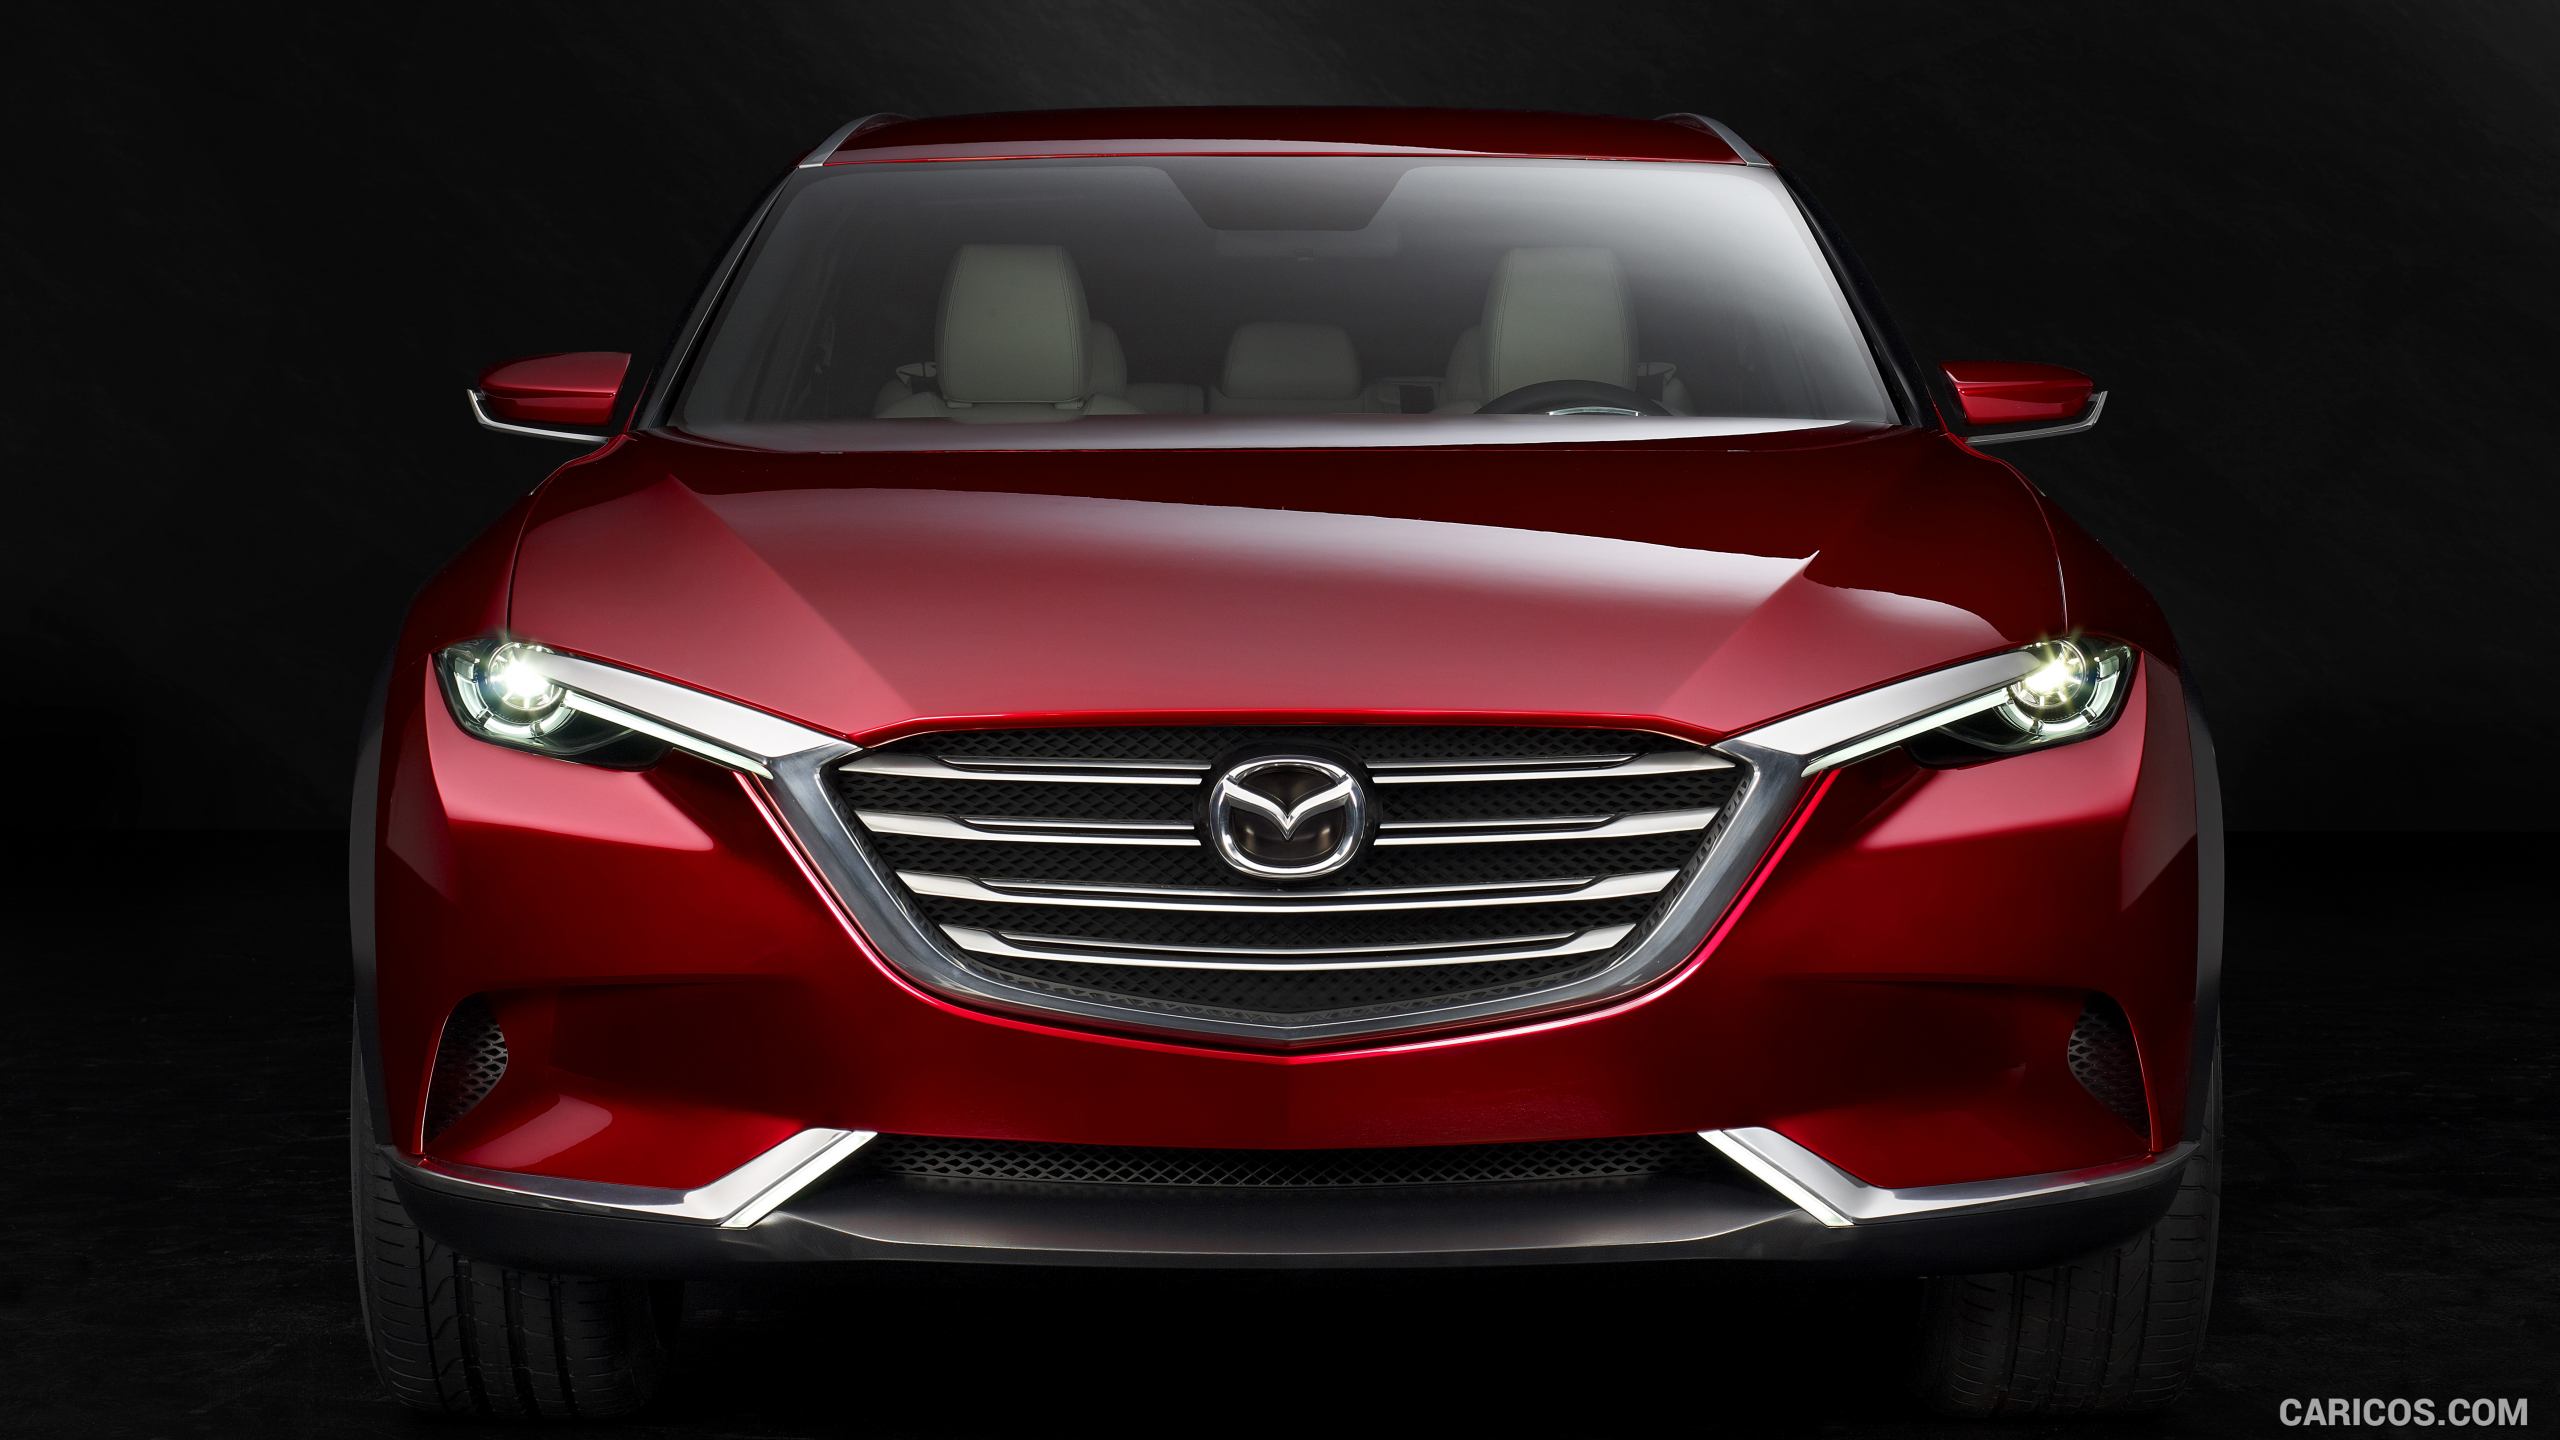 2015 Mazda Koeru Crossover Concept - Front, #5 of 17